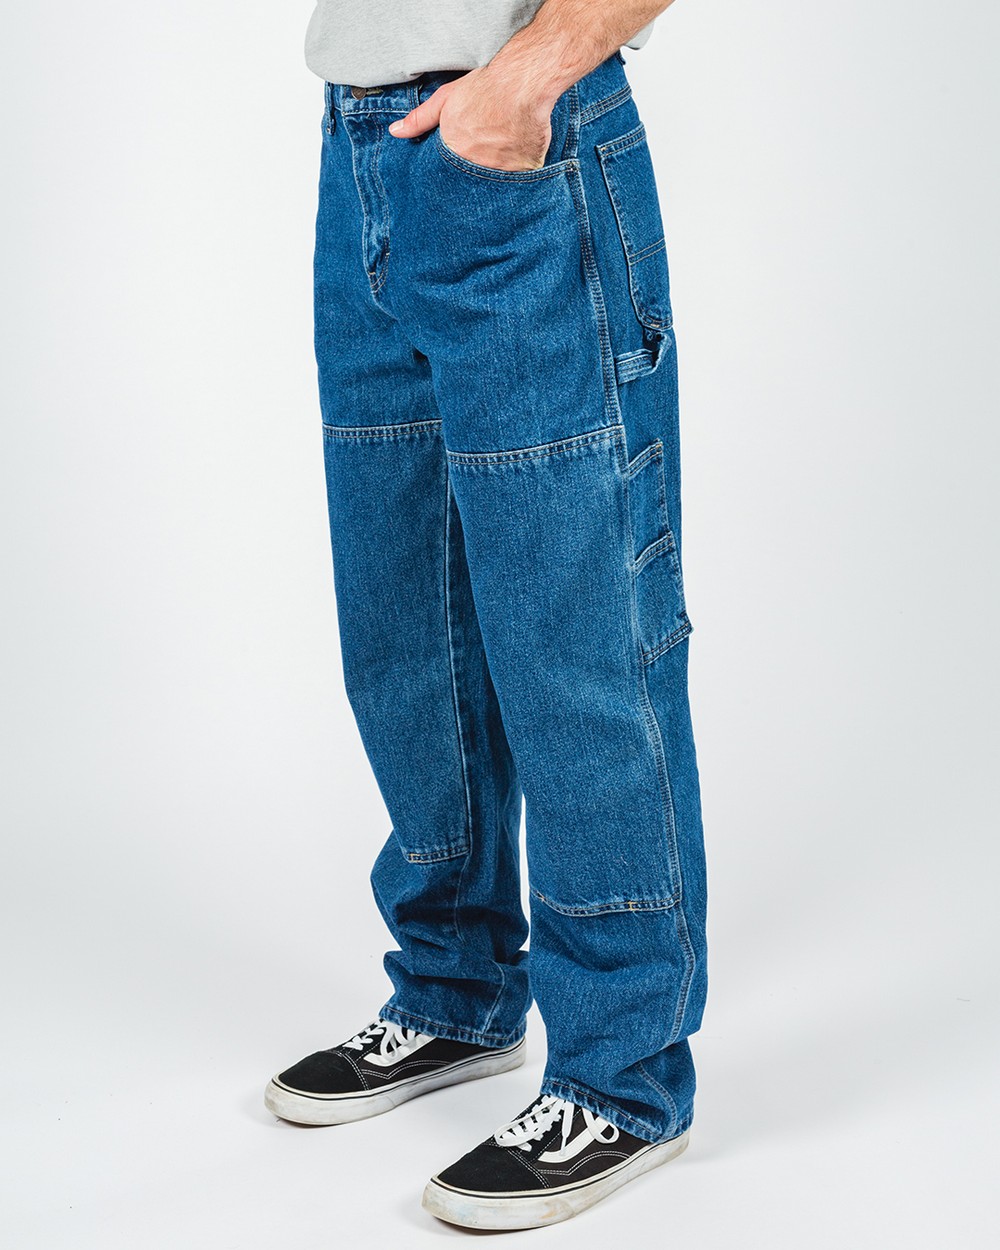 paperbag skinny jeans